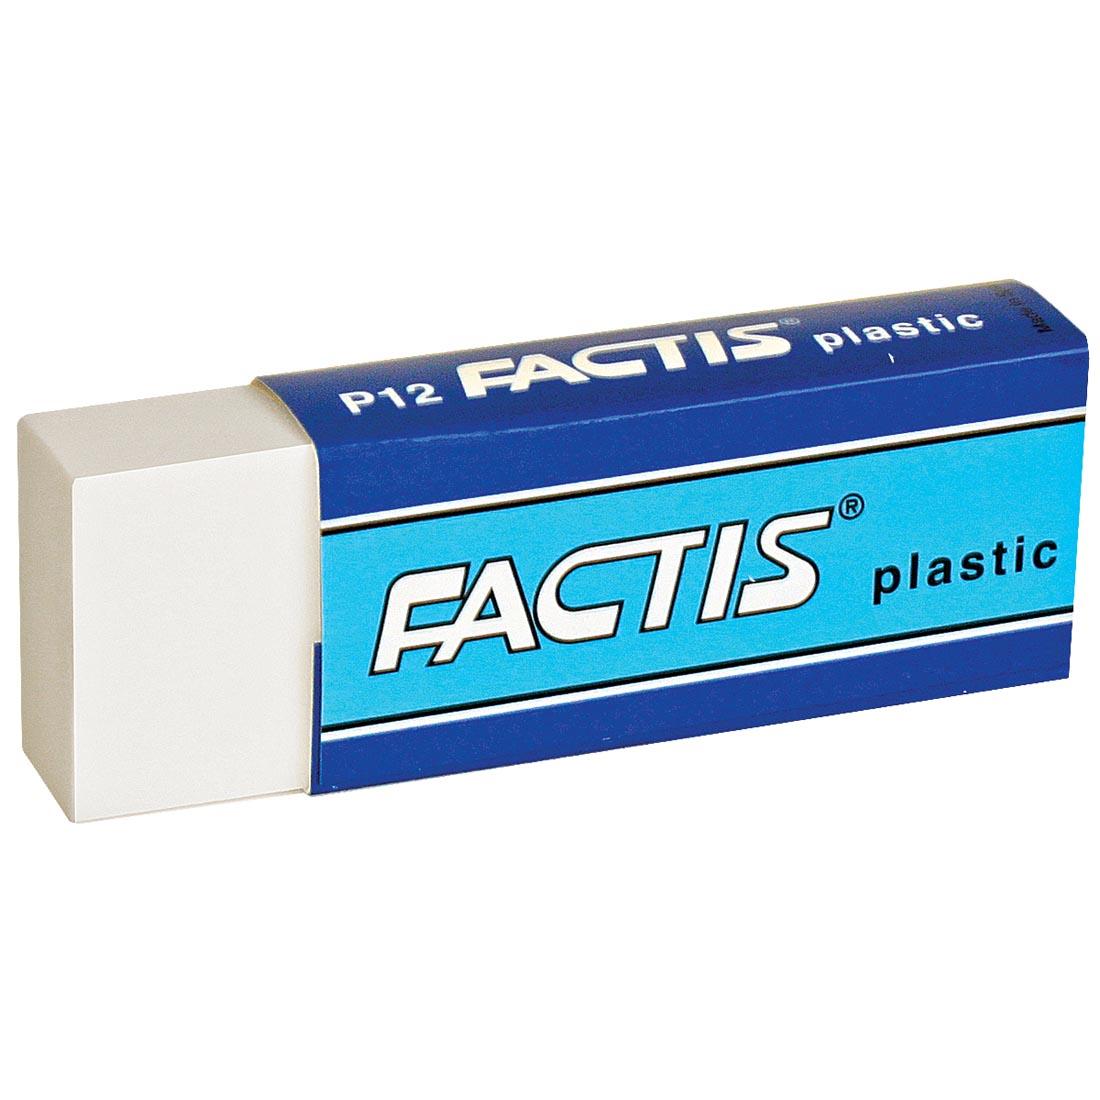 General's Factis Plastic Eraser and Carving Block